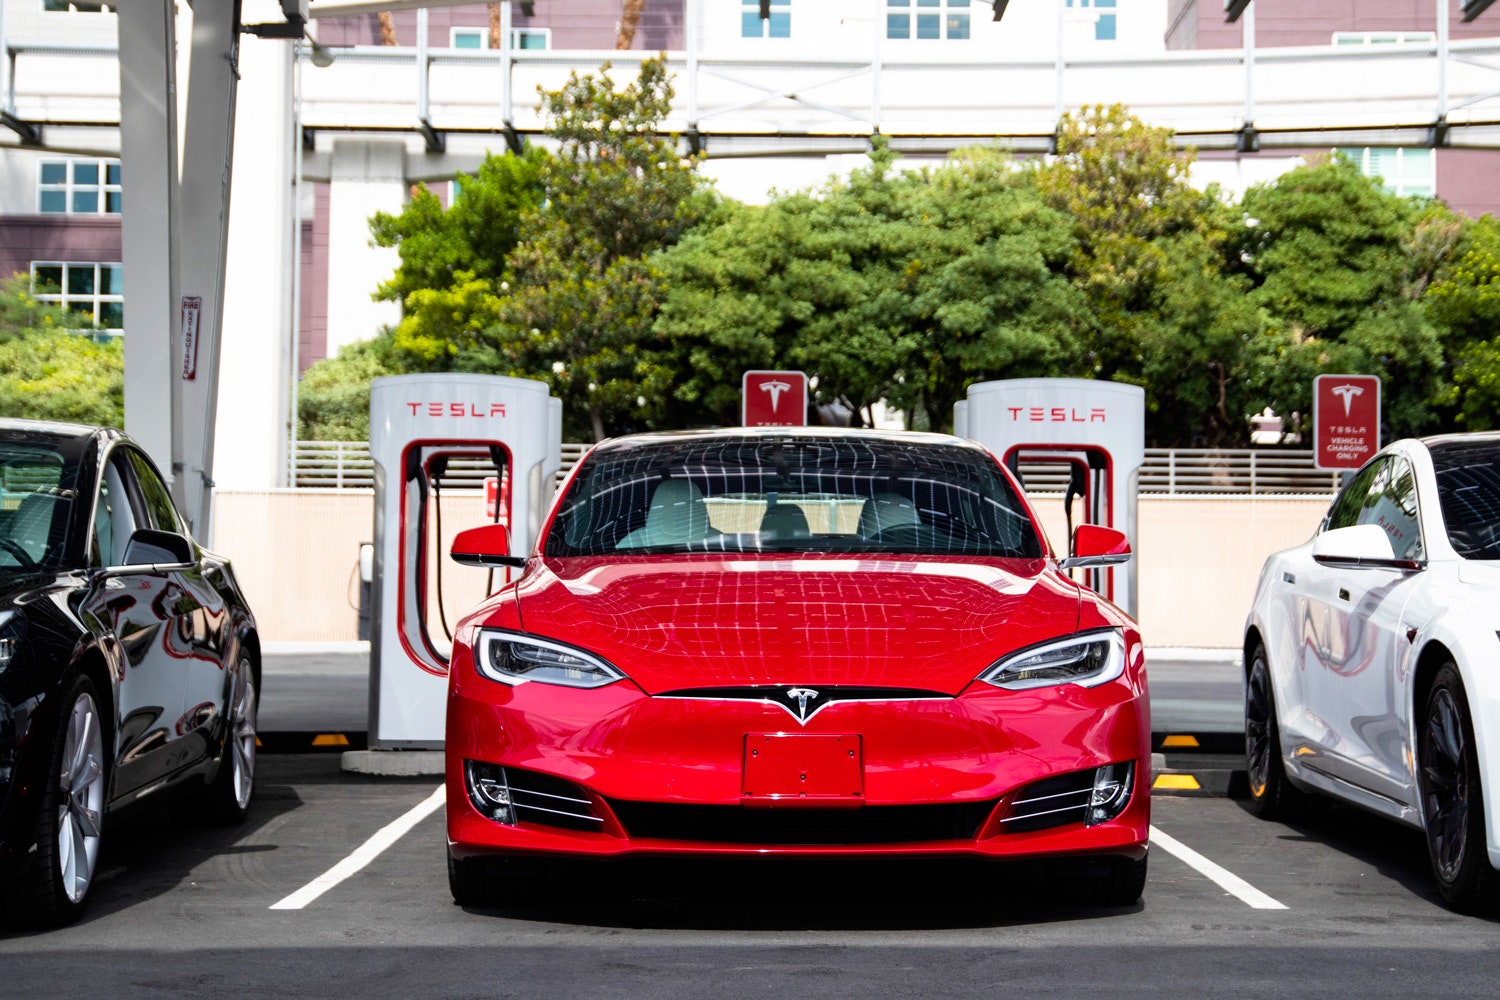 Tesla Battery Shows Impressive Performance After 174K Miles Of Use